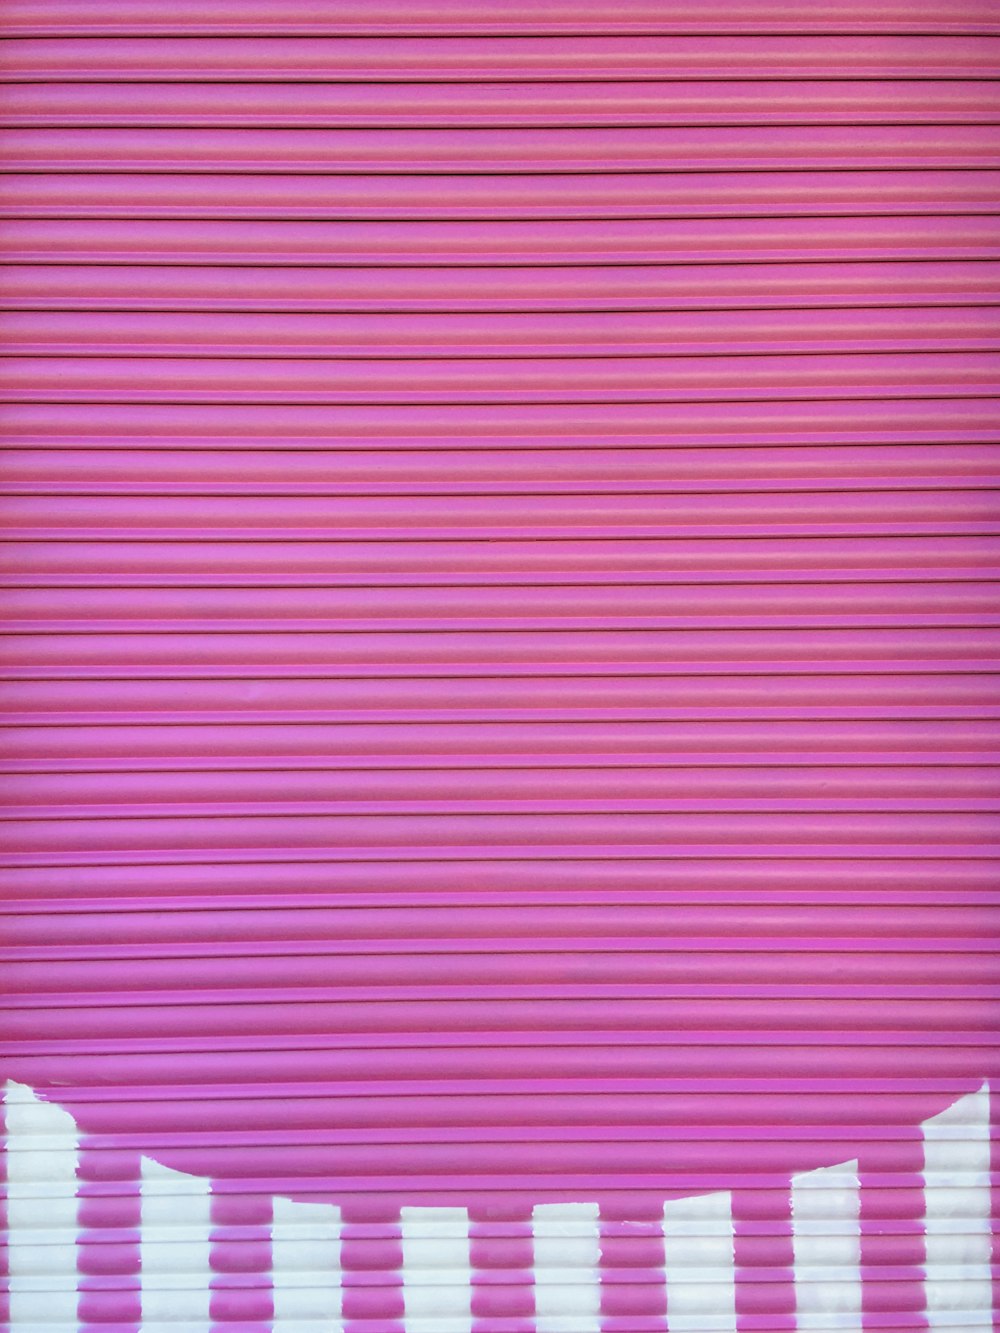 a close up of a pink roller door